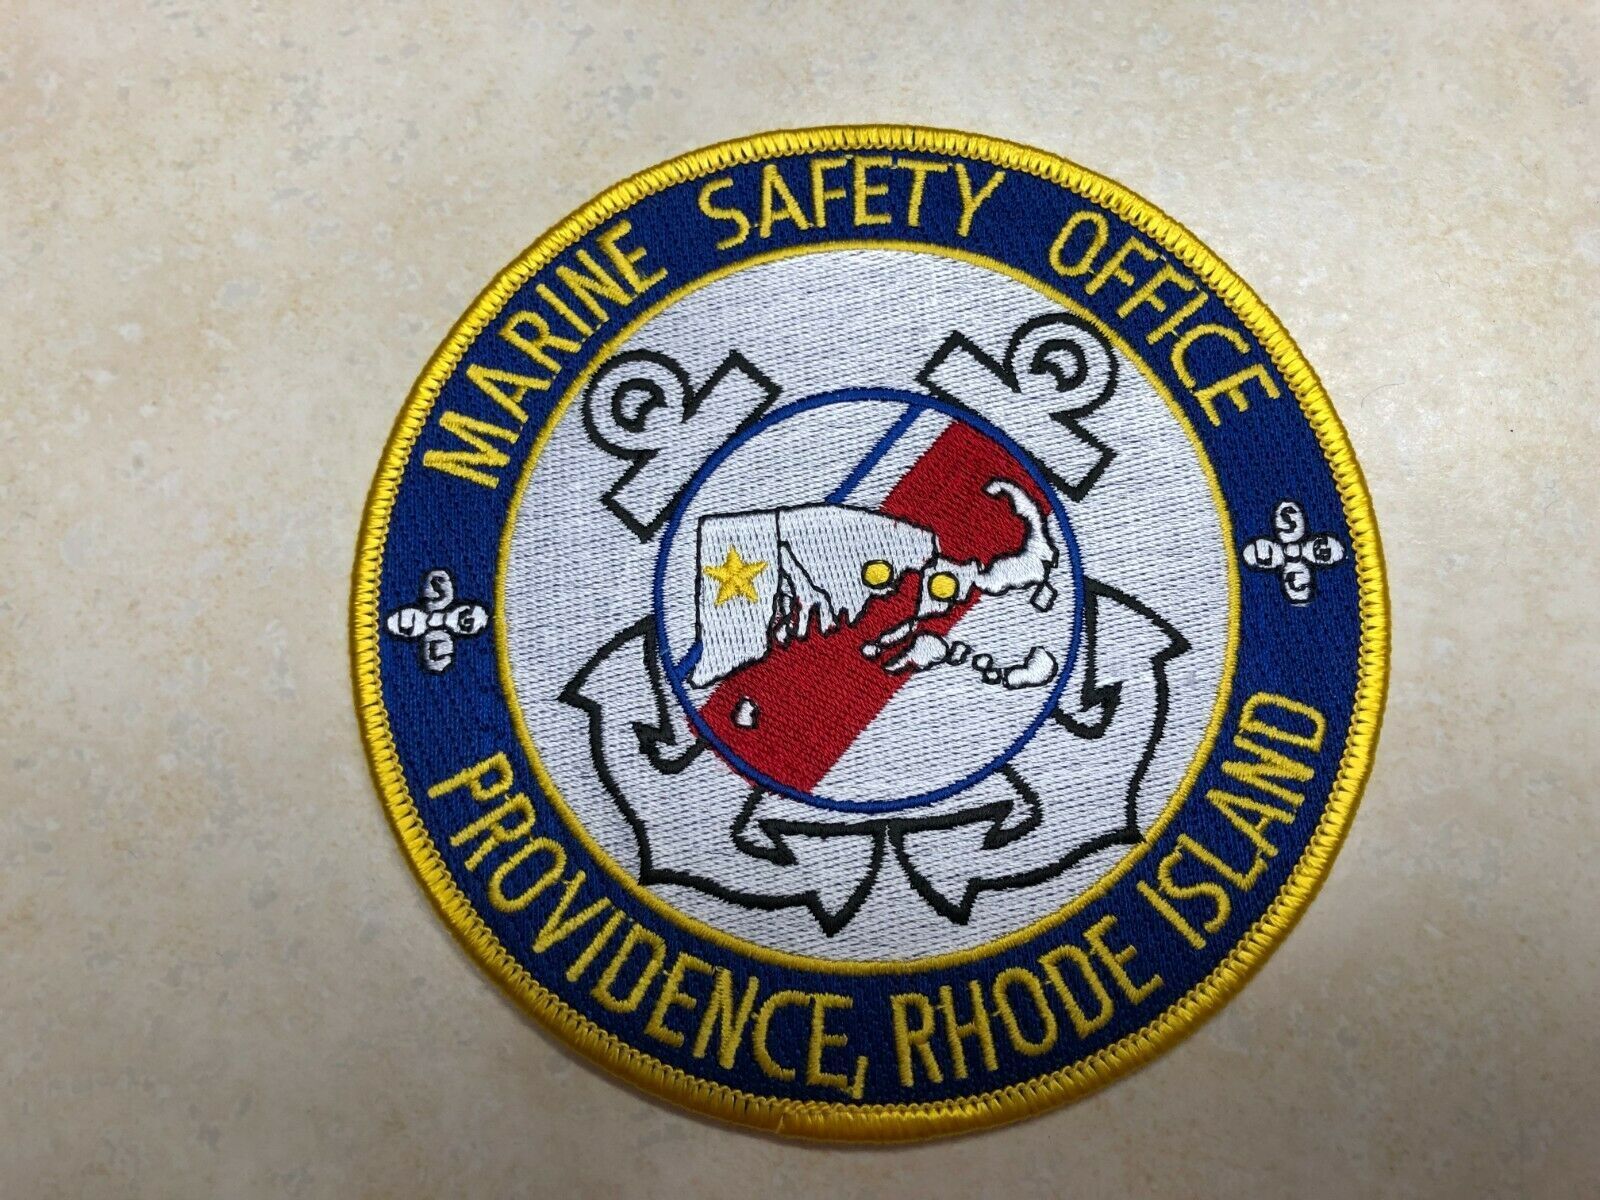 US Coast Guard Marine Safety Office Providence Rhode Island Patch